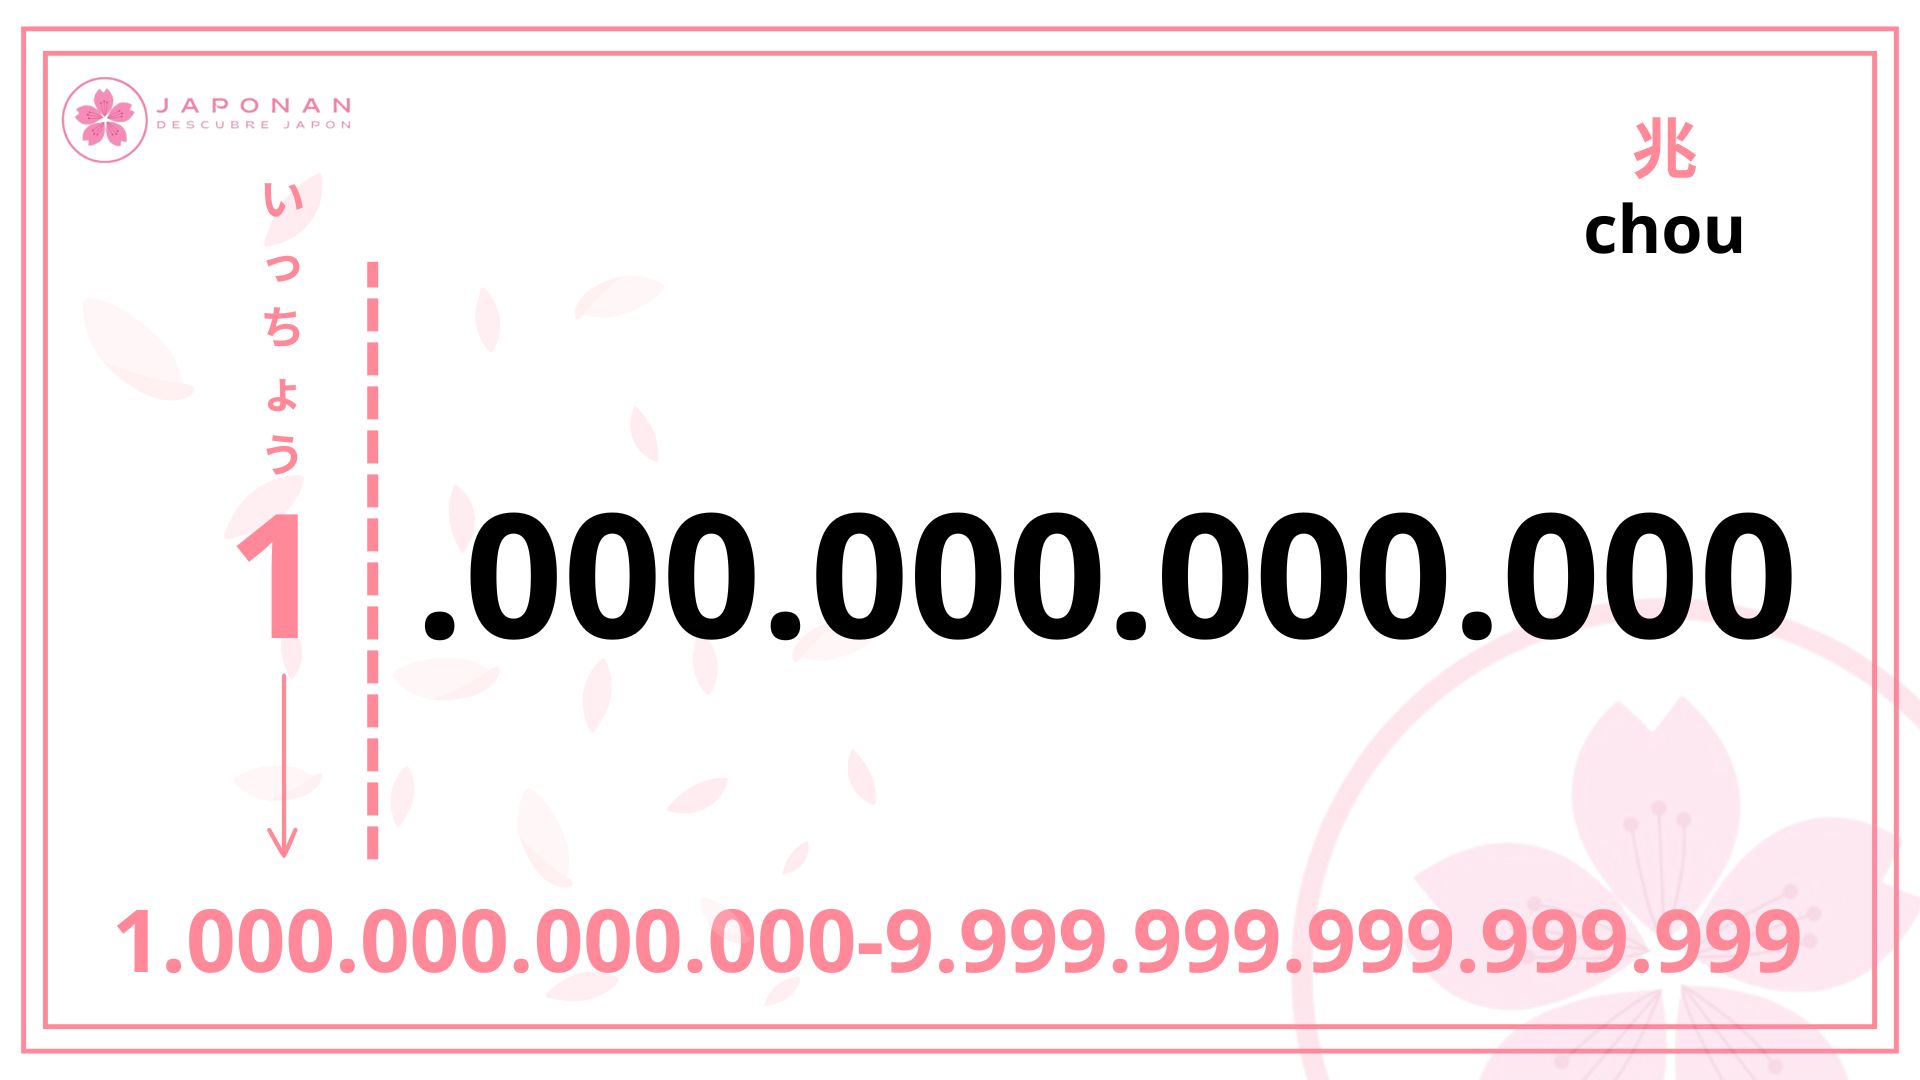 Chou, 1.000.000.000.000, los números grandes en japonés